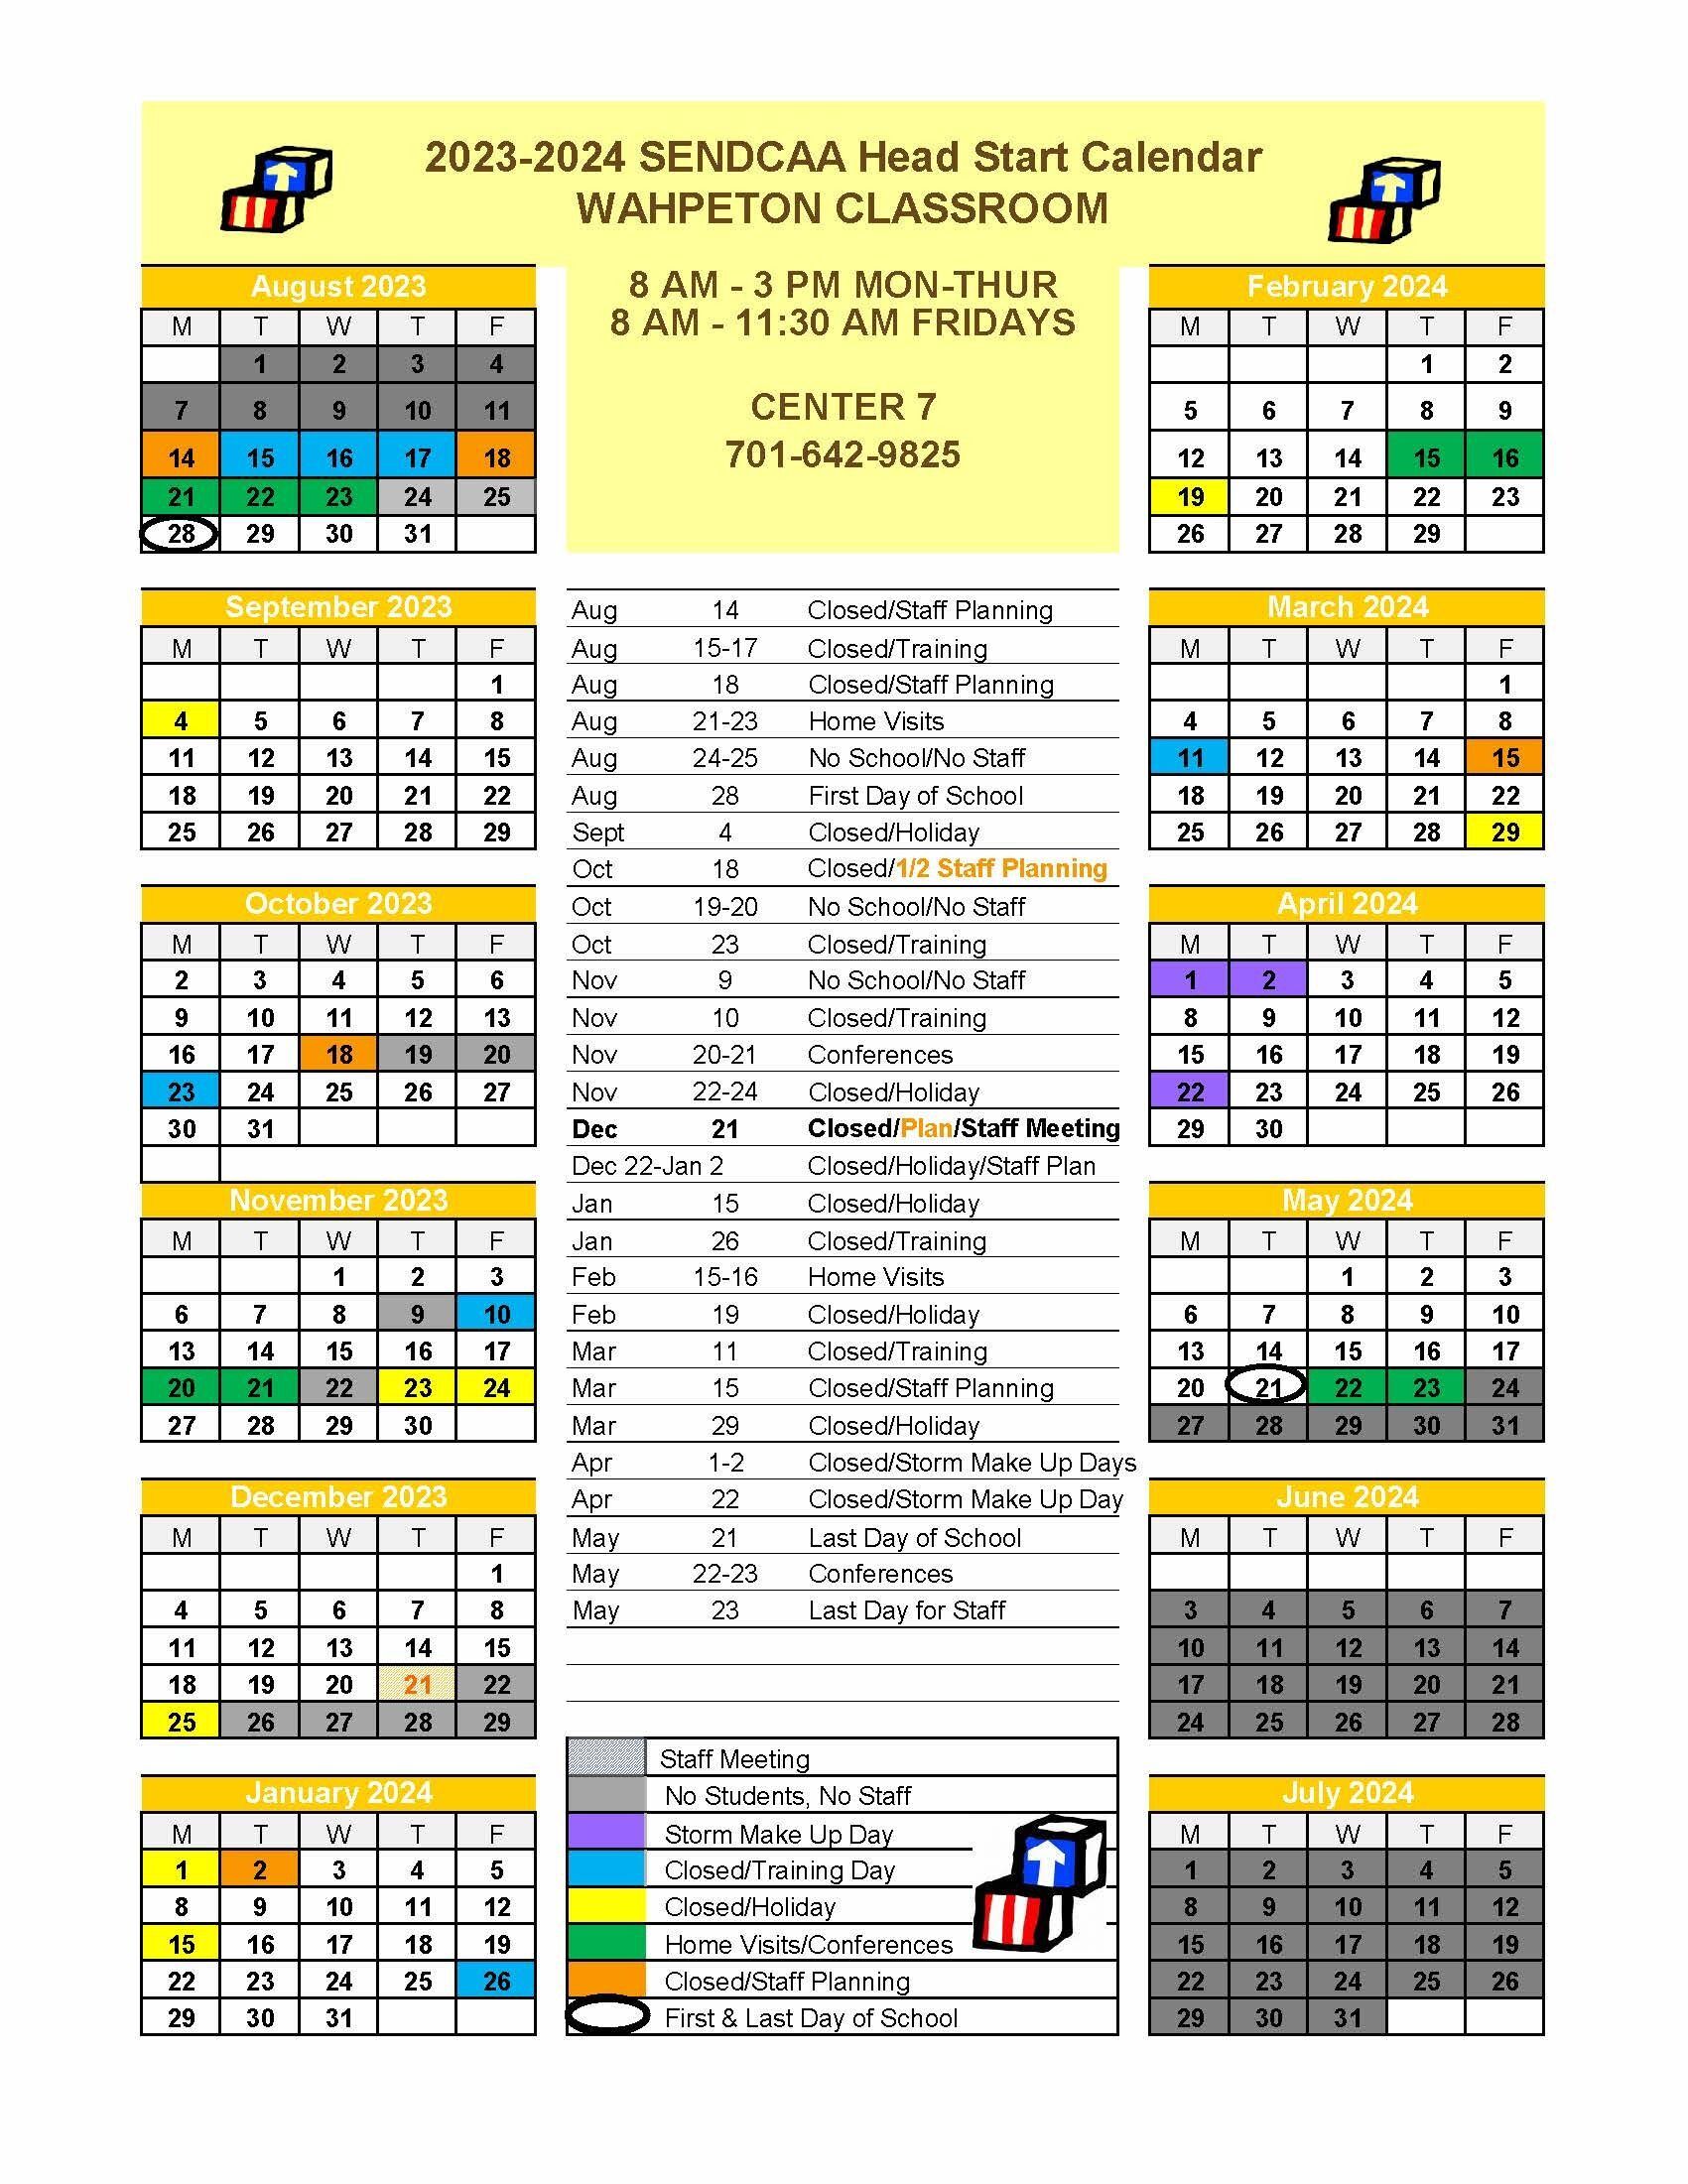 2023-2024 Wahpeton Calendar